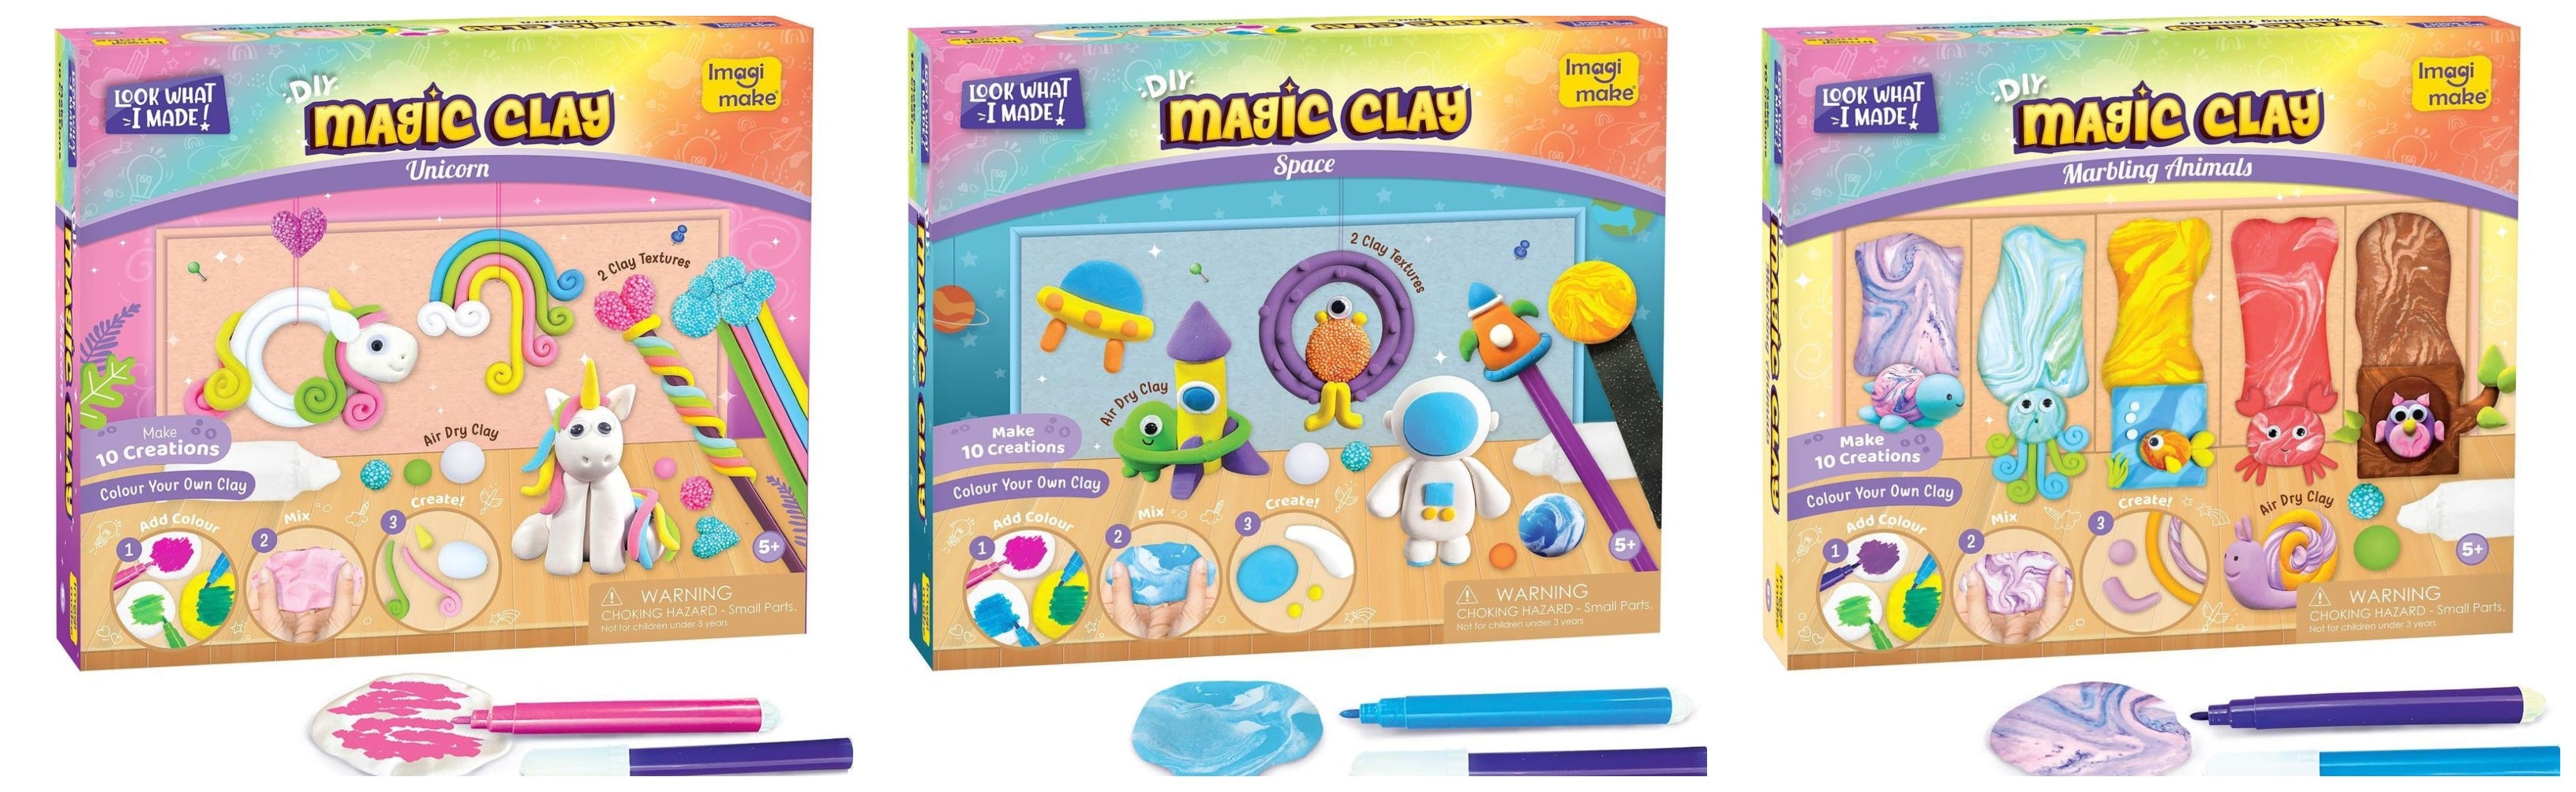 Magic Clay kit